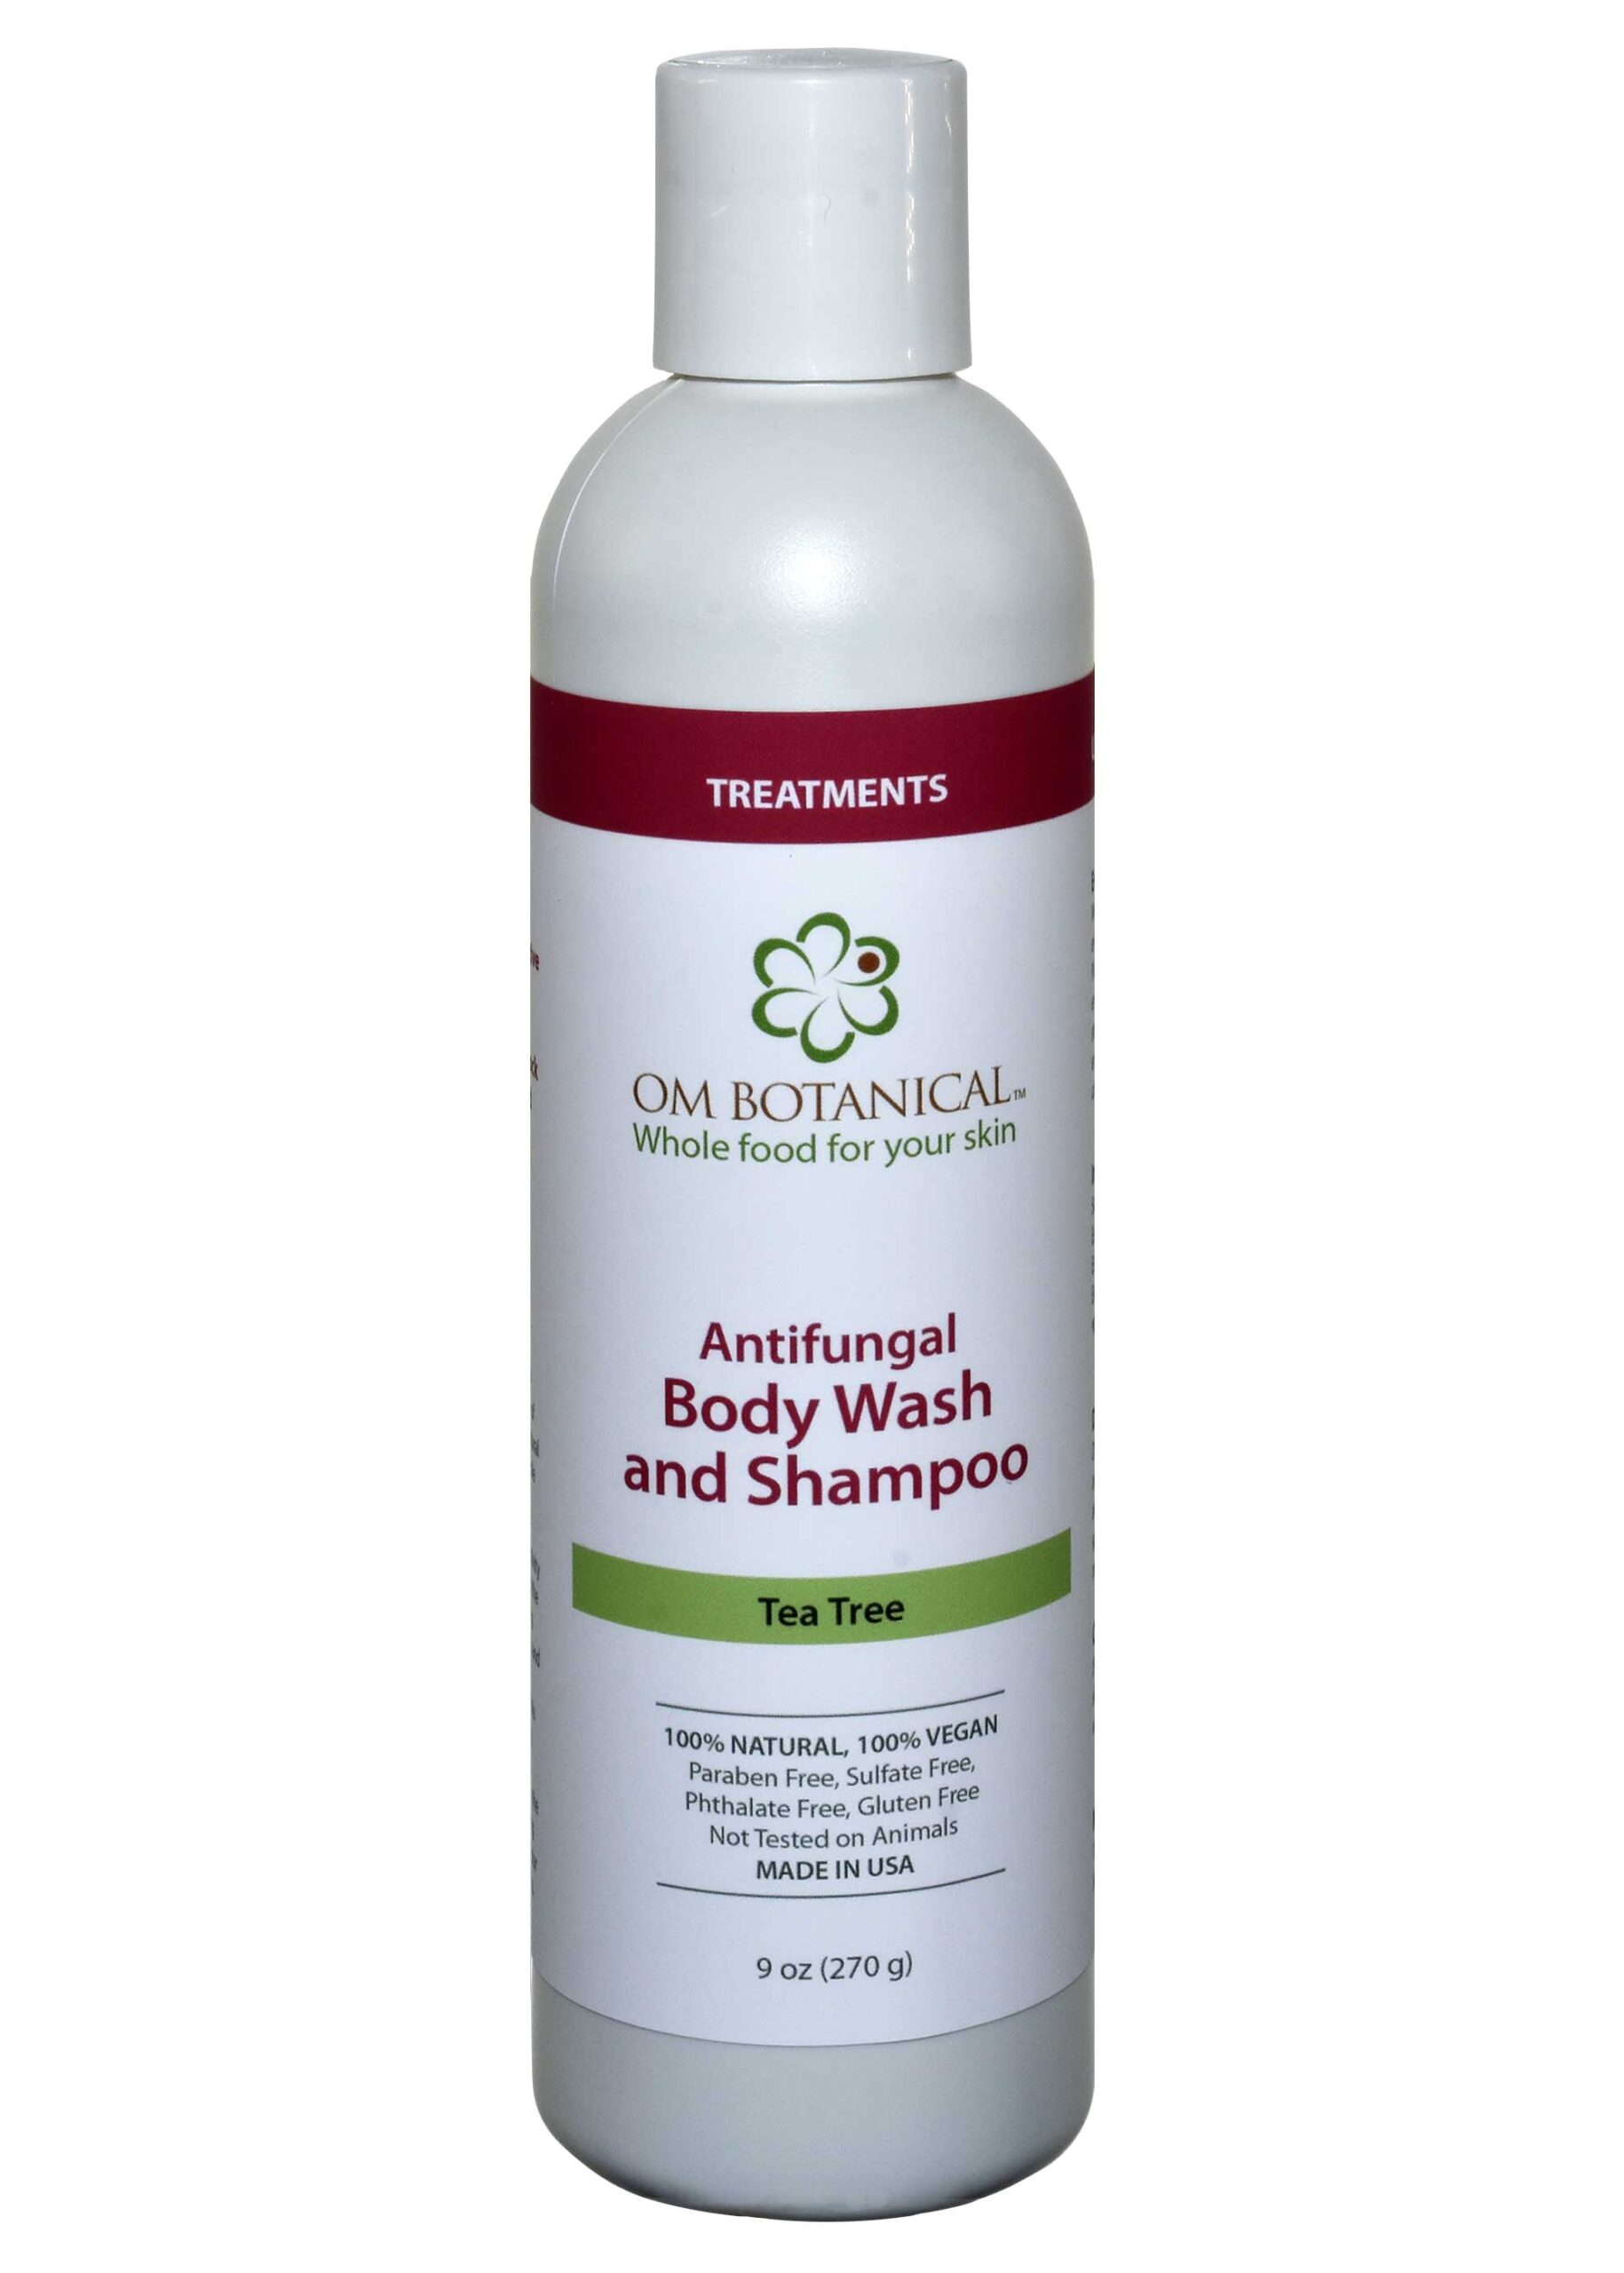 TEA TREE OIL SOAP, Antifungal Body Wash and Shampoo | Sulfate Free, Organic  Treatment for Fungus, Bacteria, Body Odor, Jock Itch, Eczema. Acne 9 oz -  Choose To Be Healthy